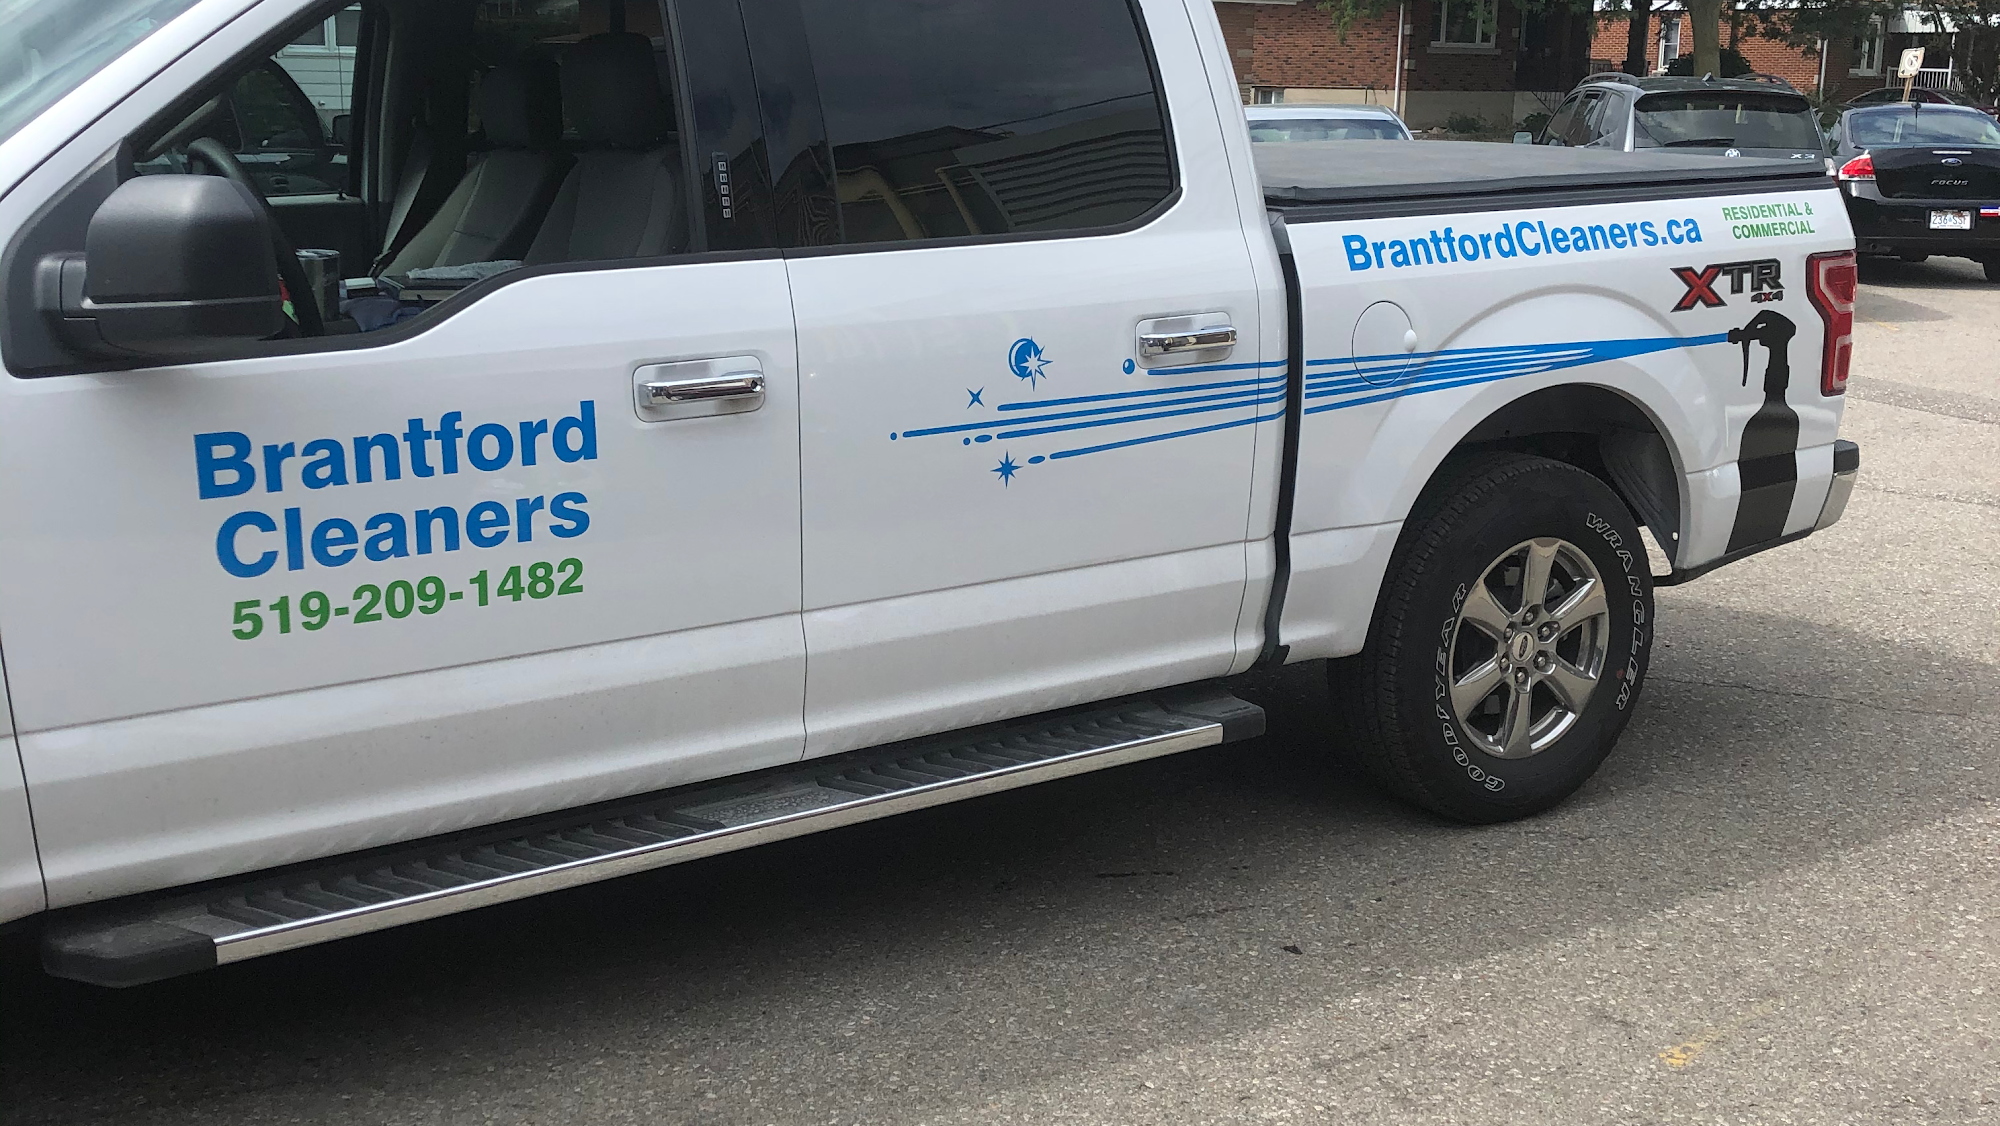 Brantford Cleaners